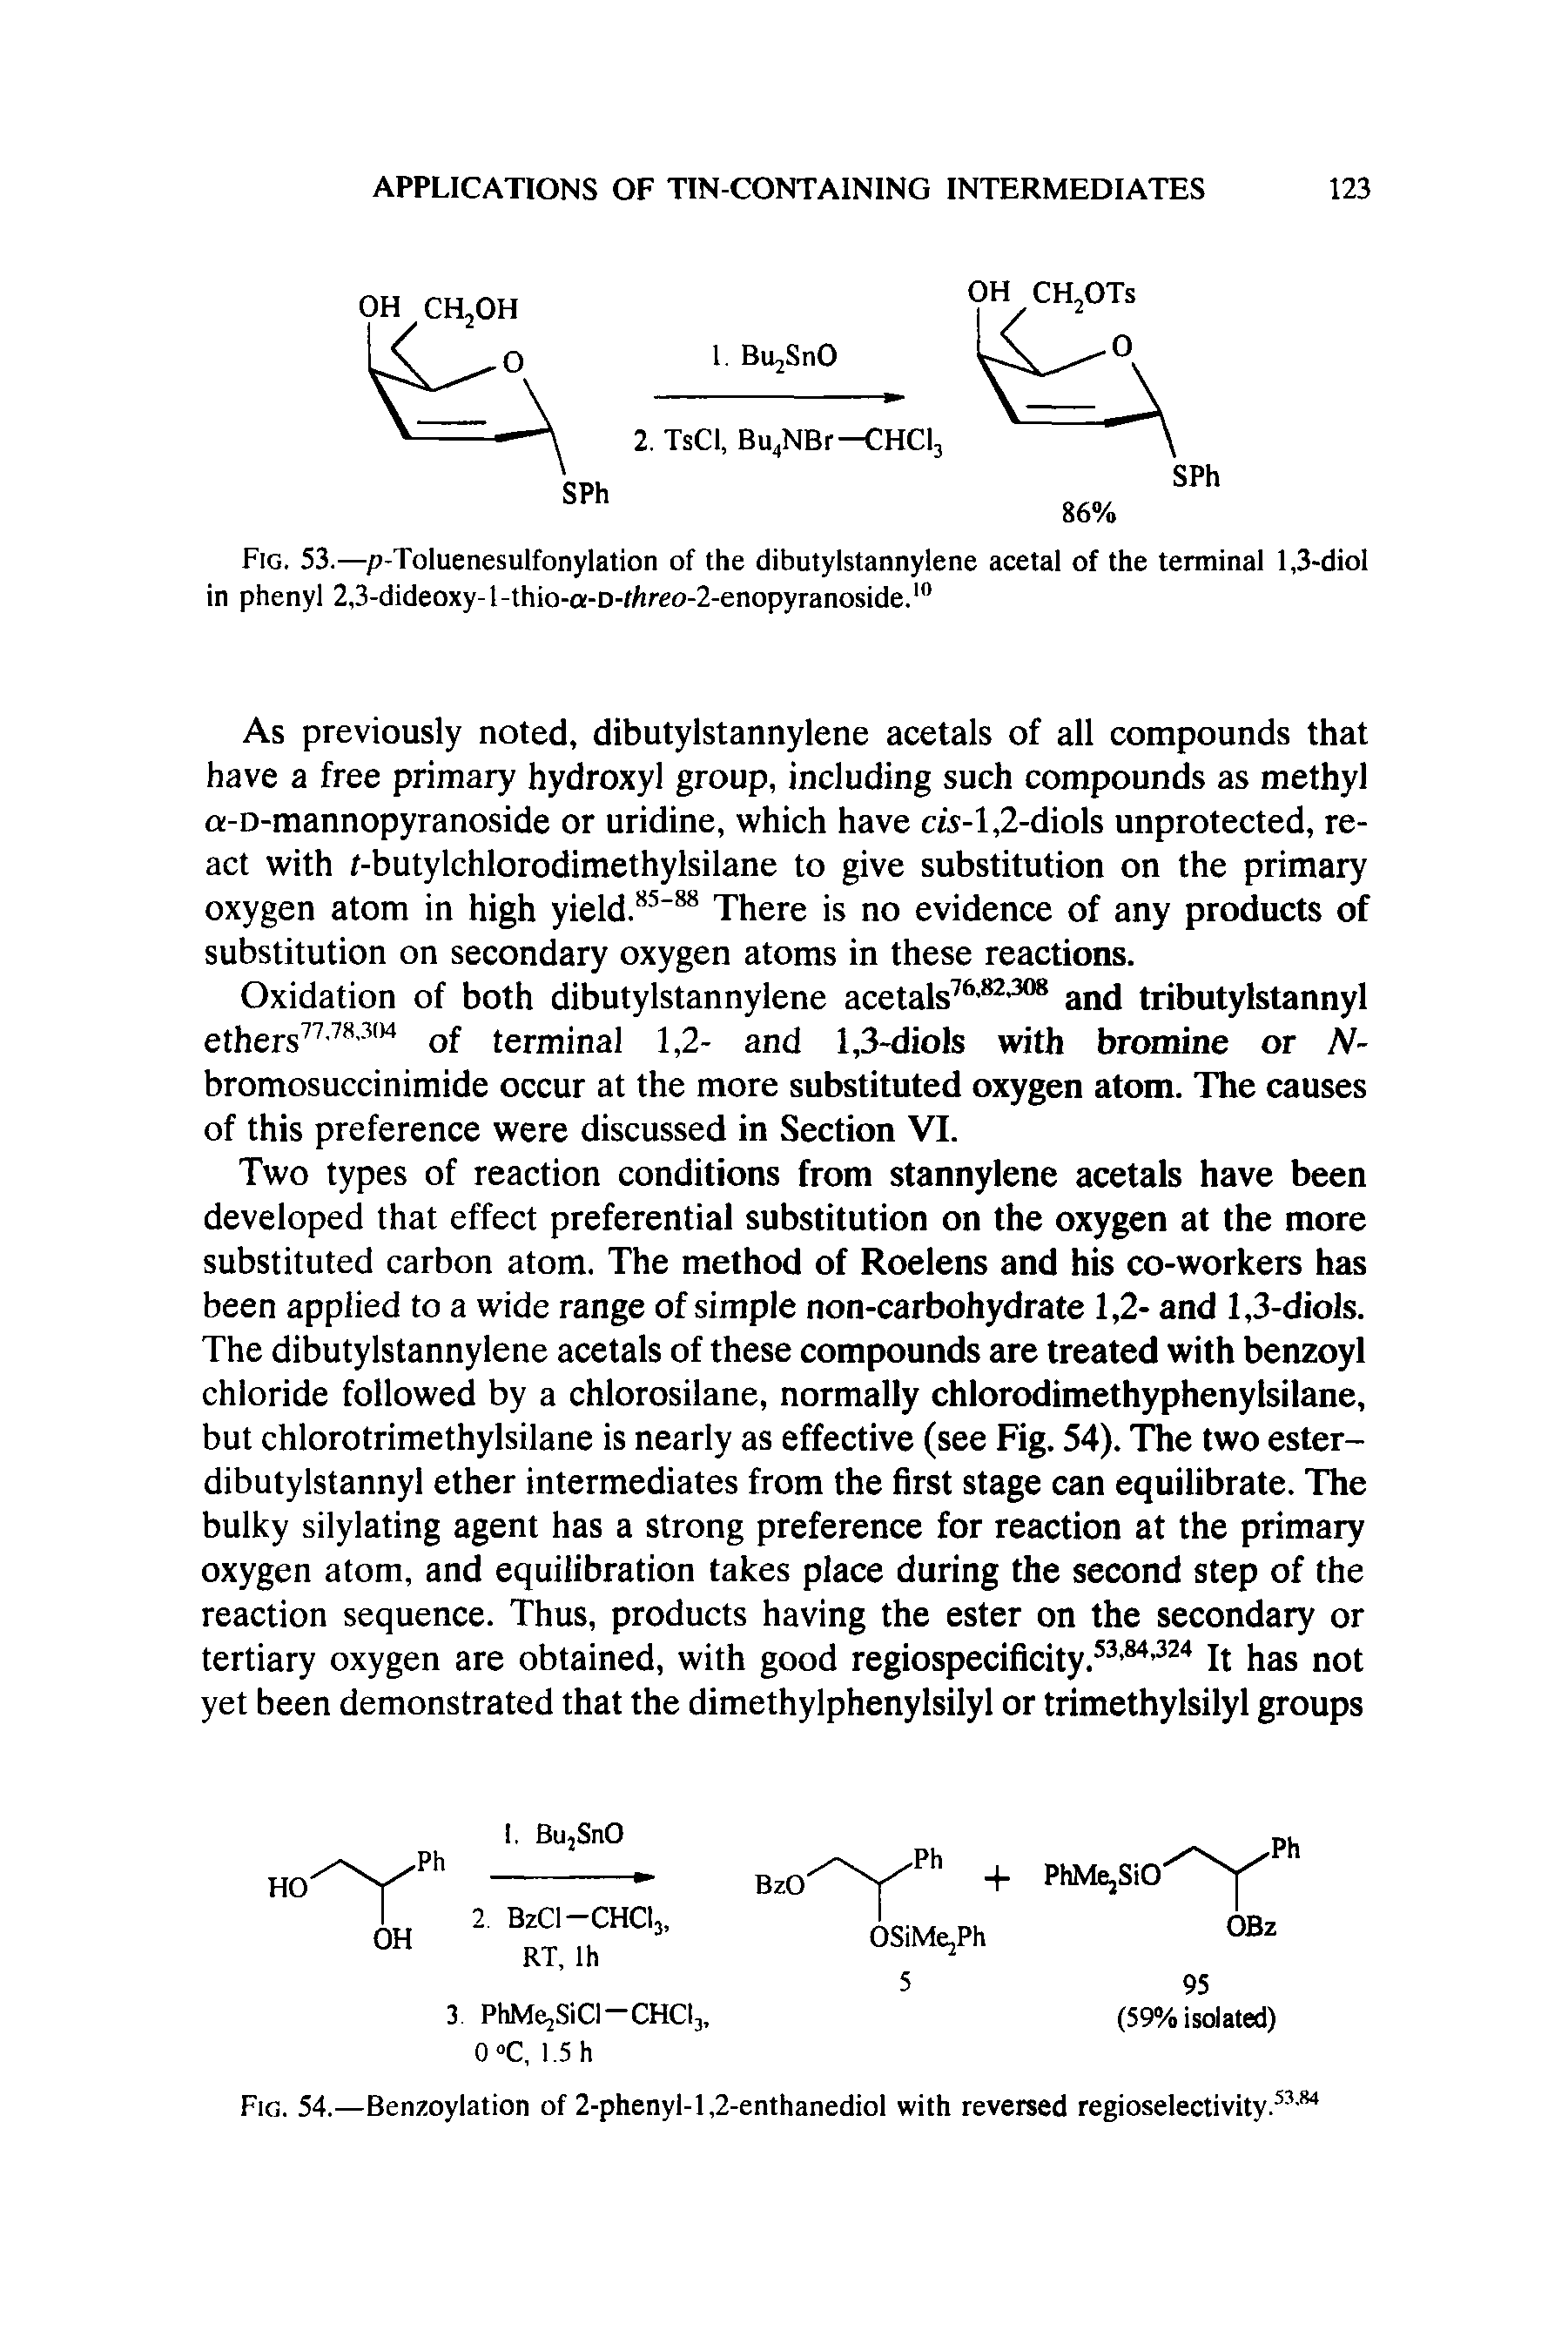 Fig. 54.—Benzoylation of 2-phenyl-1,2-enthanediol with reversed regioselectivity.55-84...